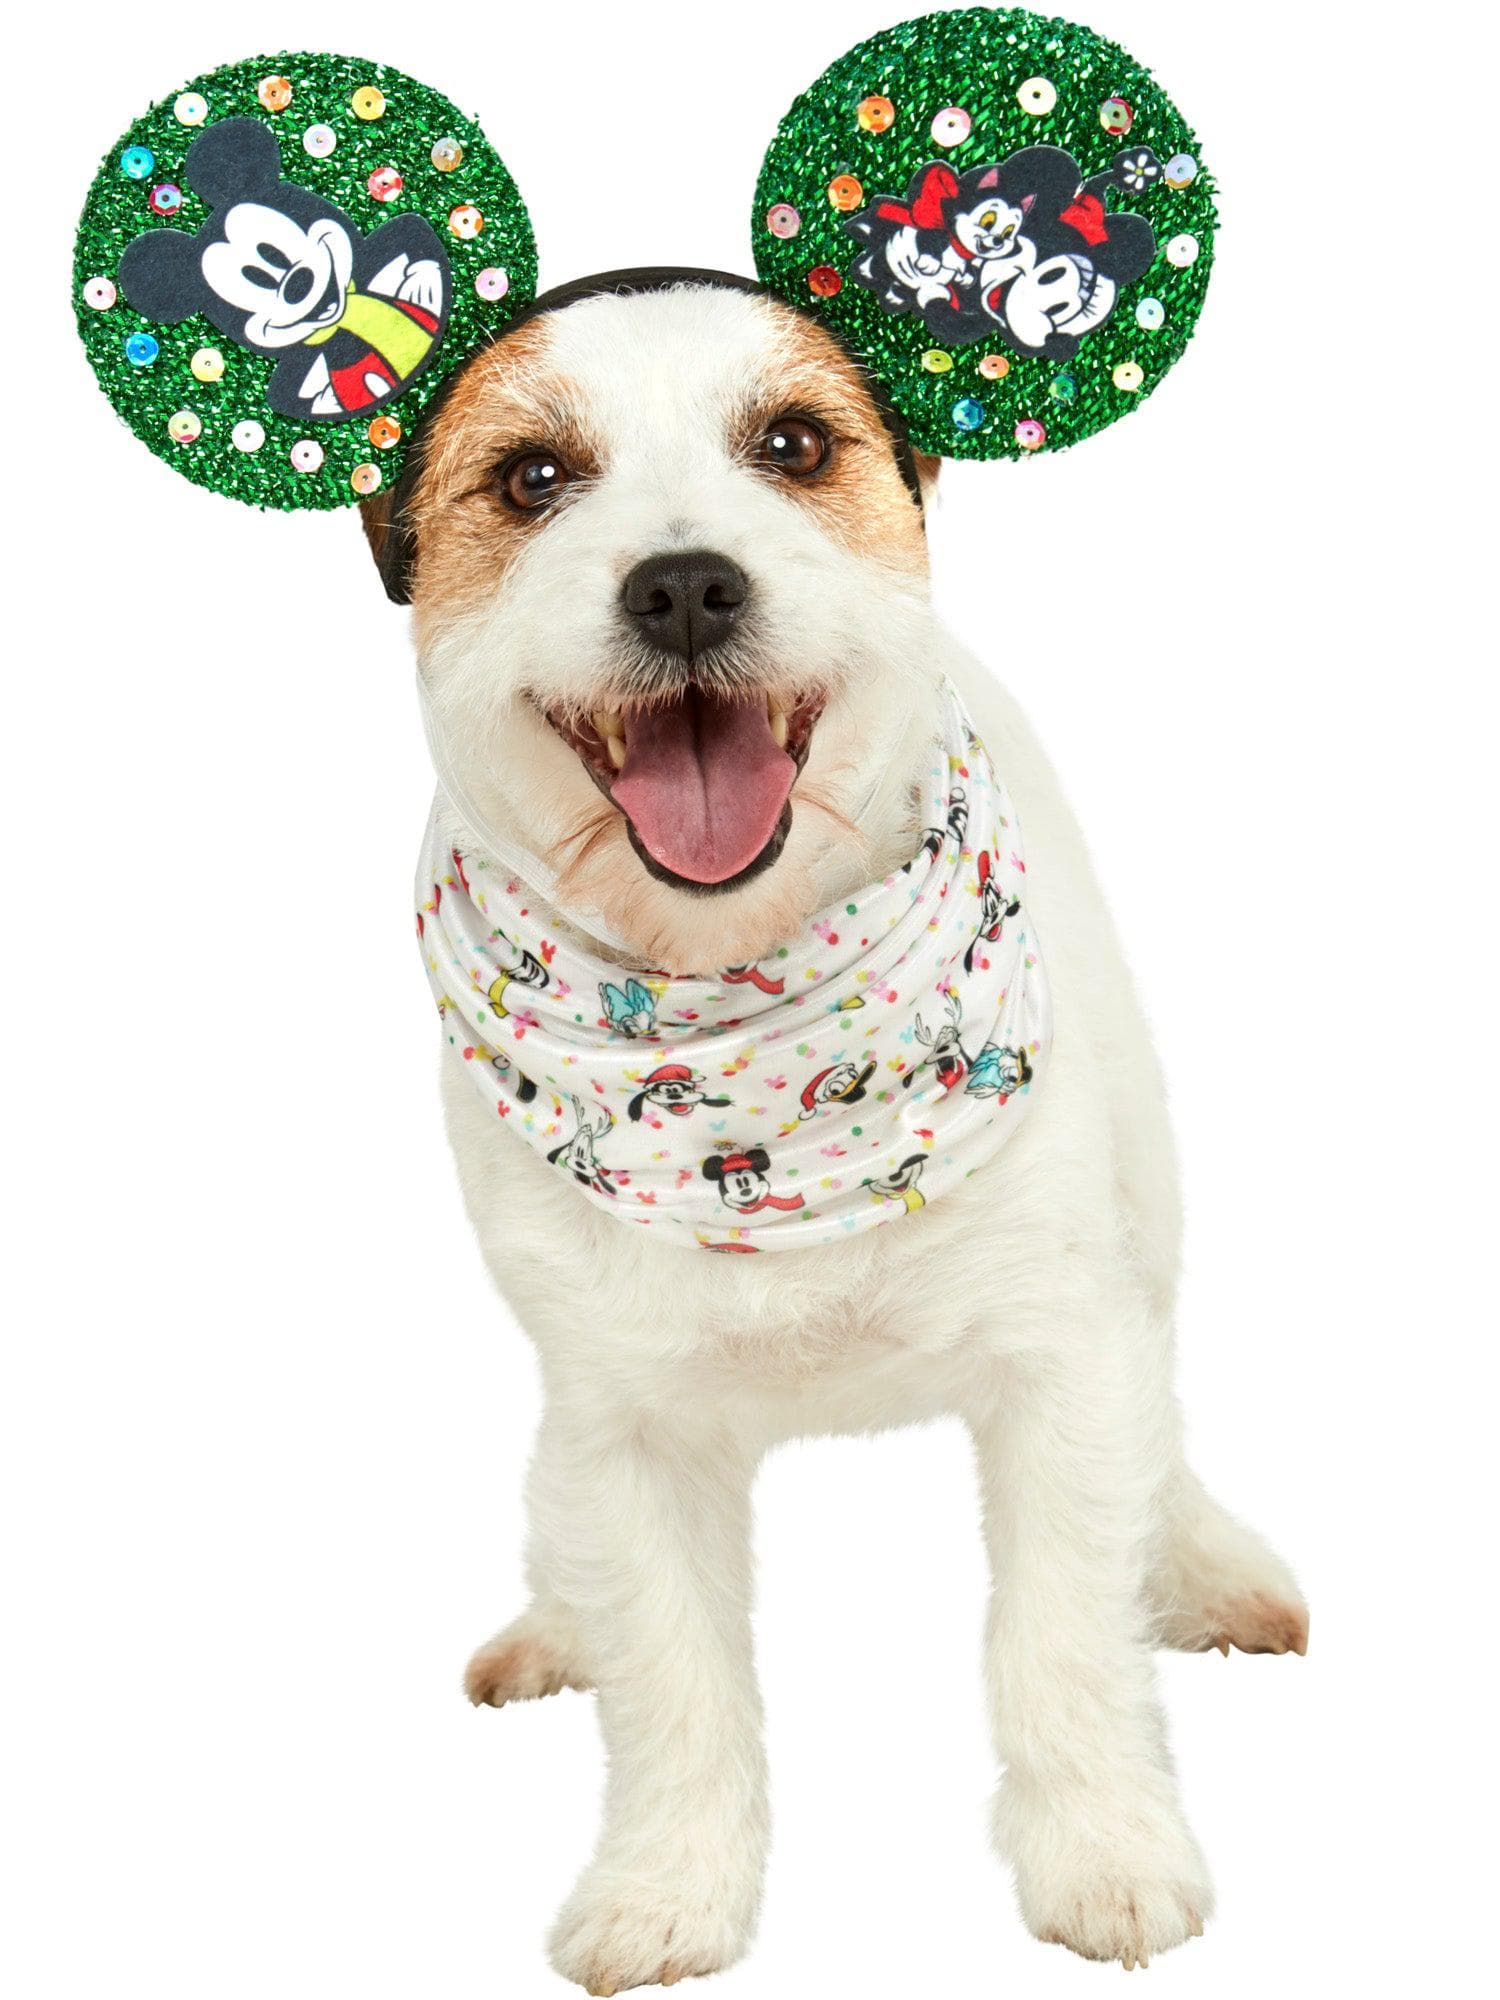 Mickey Mouse Holiday Pet Headpiece and Bandana - costumes.com